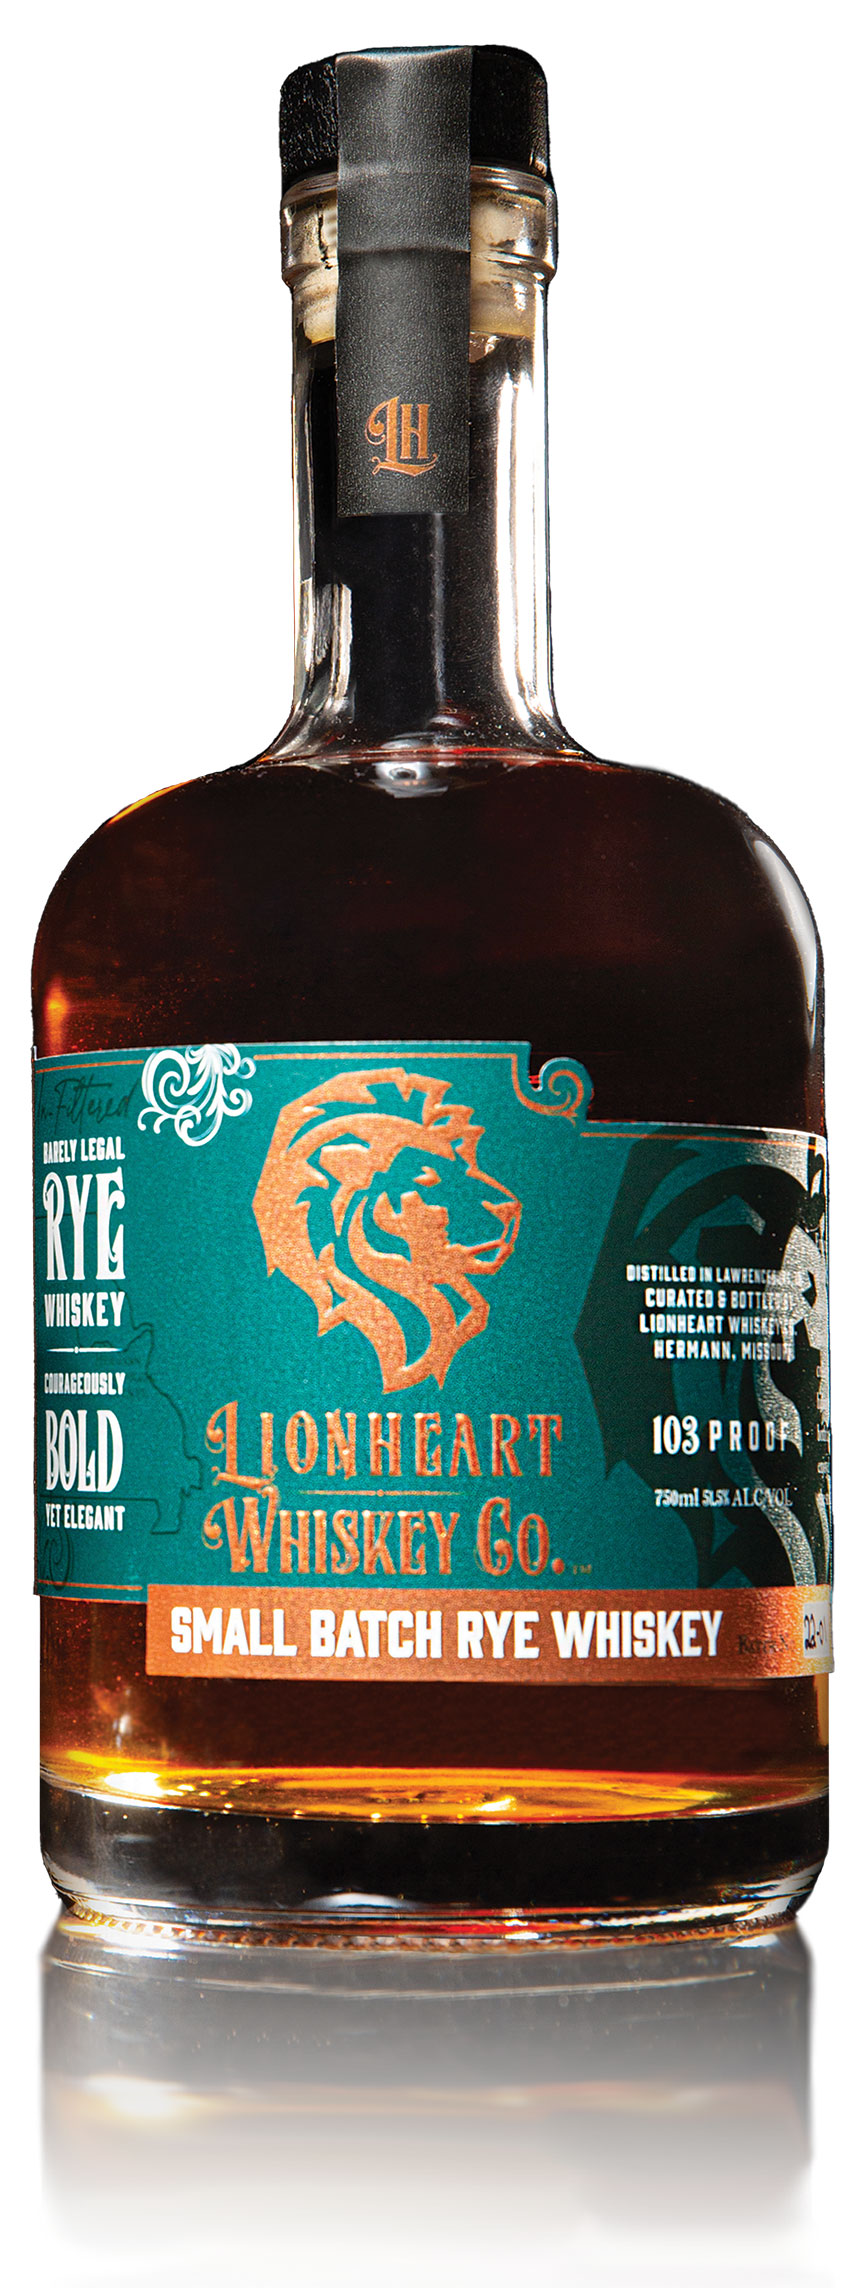 Bottle of Lionheart Whiskey Co. Small Batch Rye Whiskey